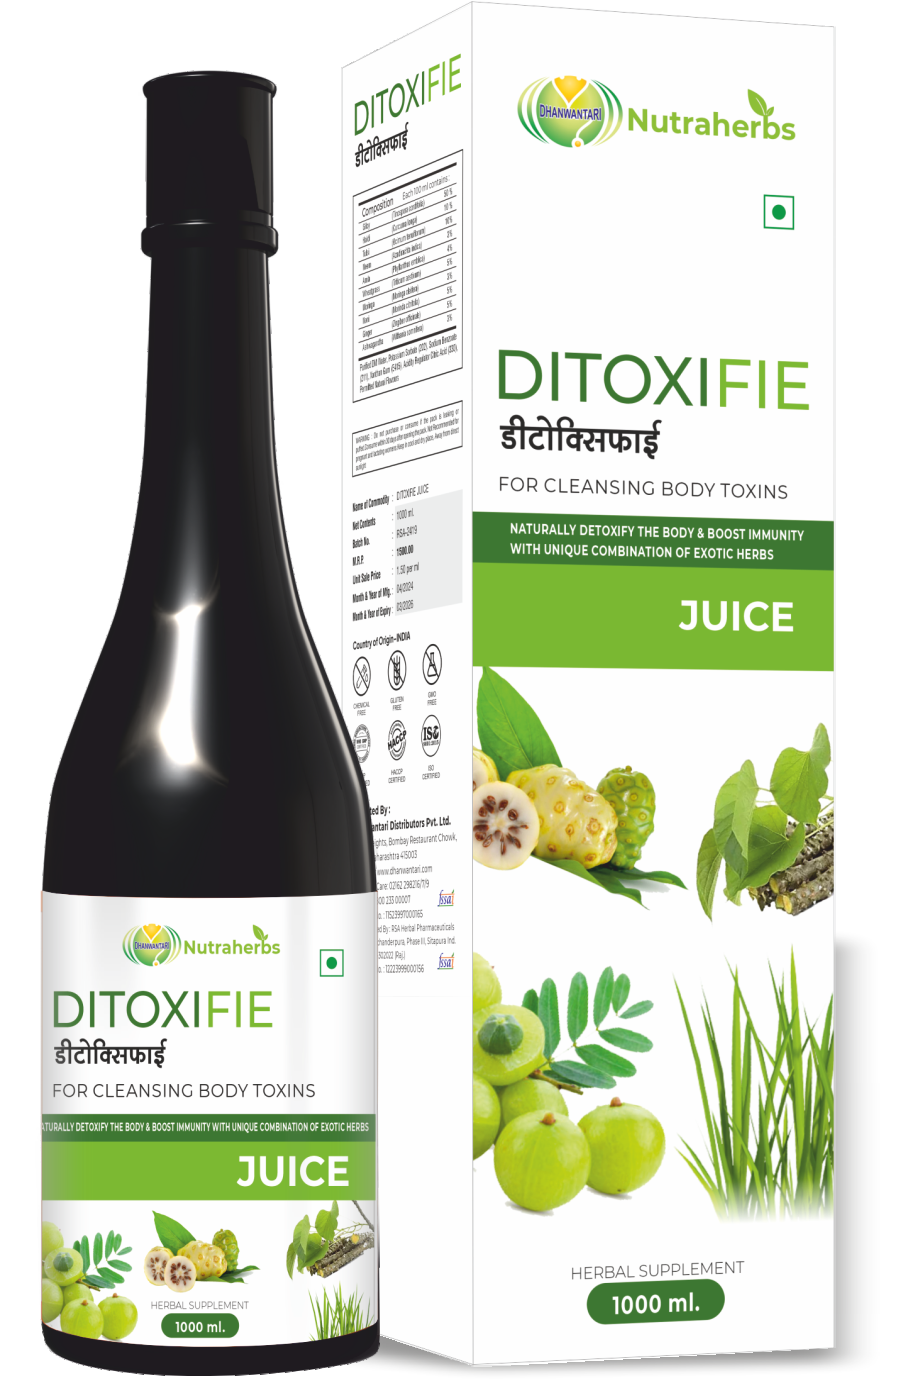 Ditoxifie Juice